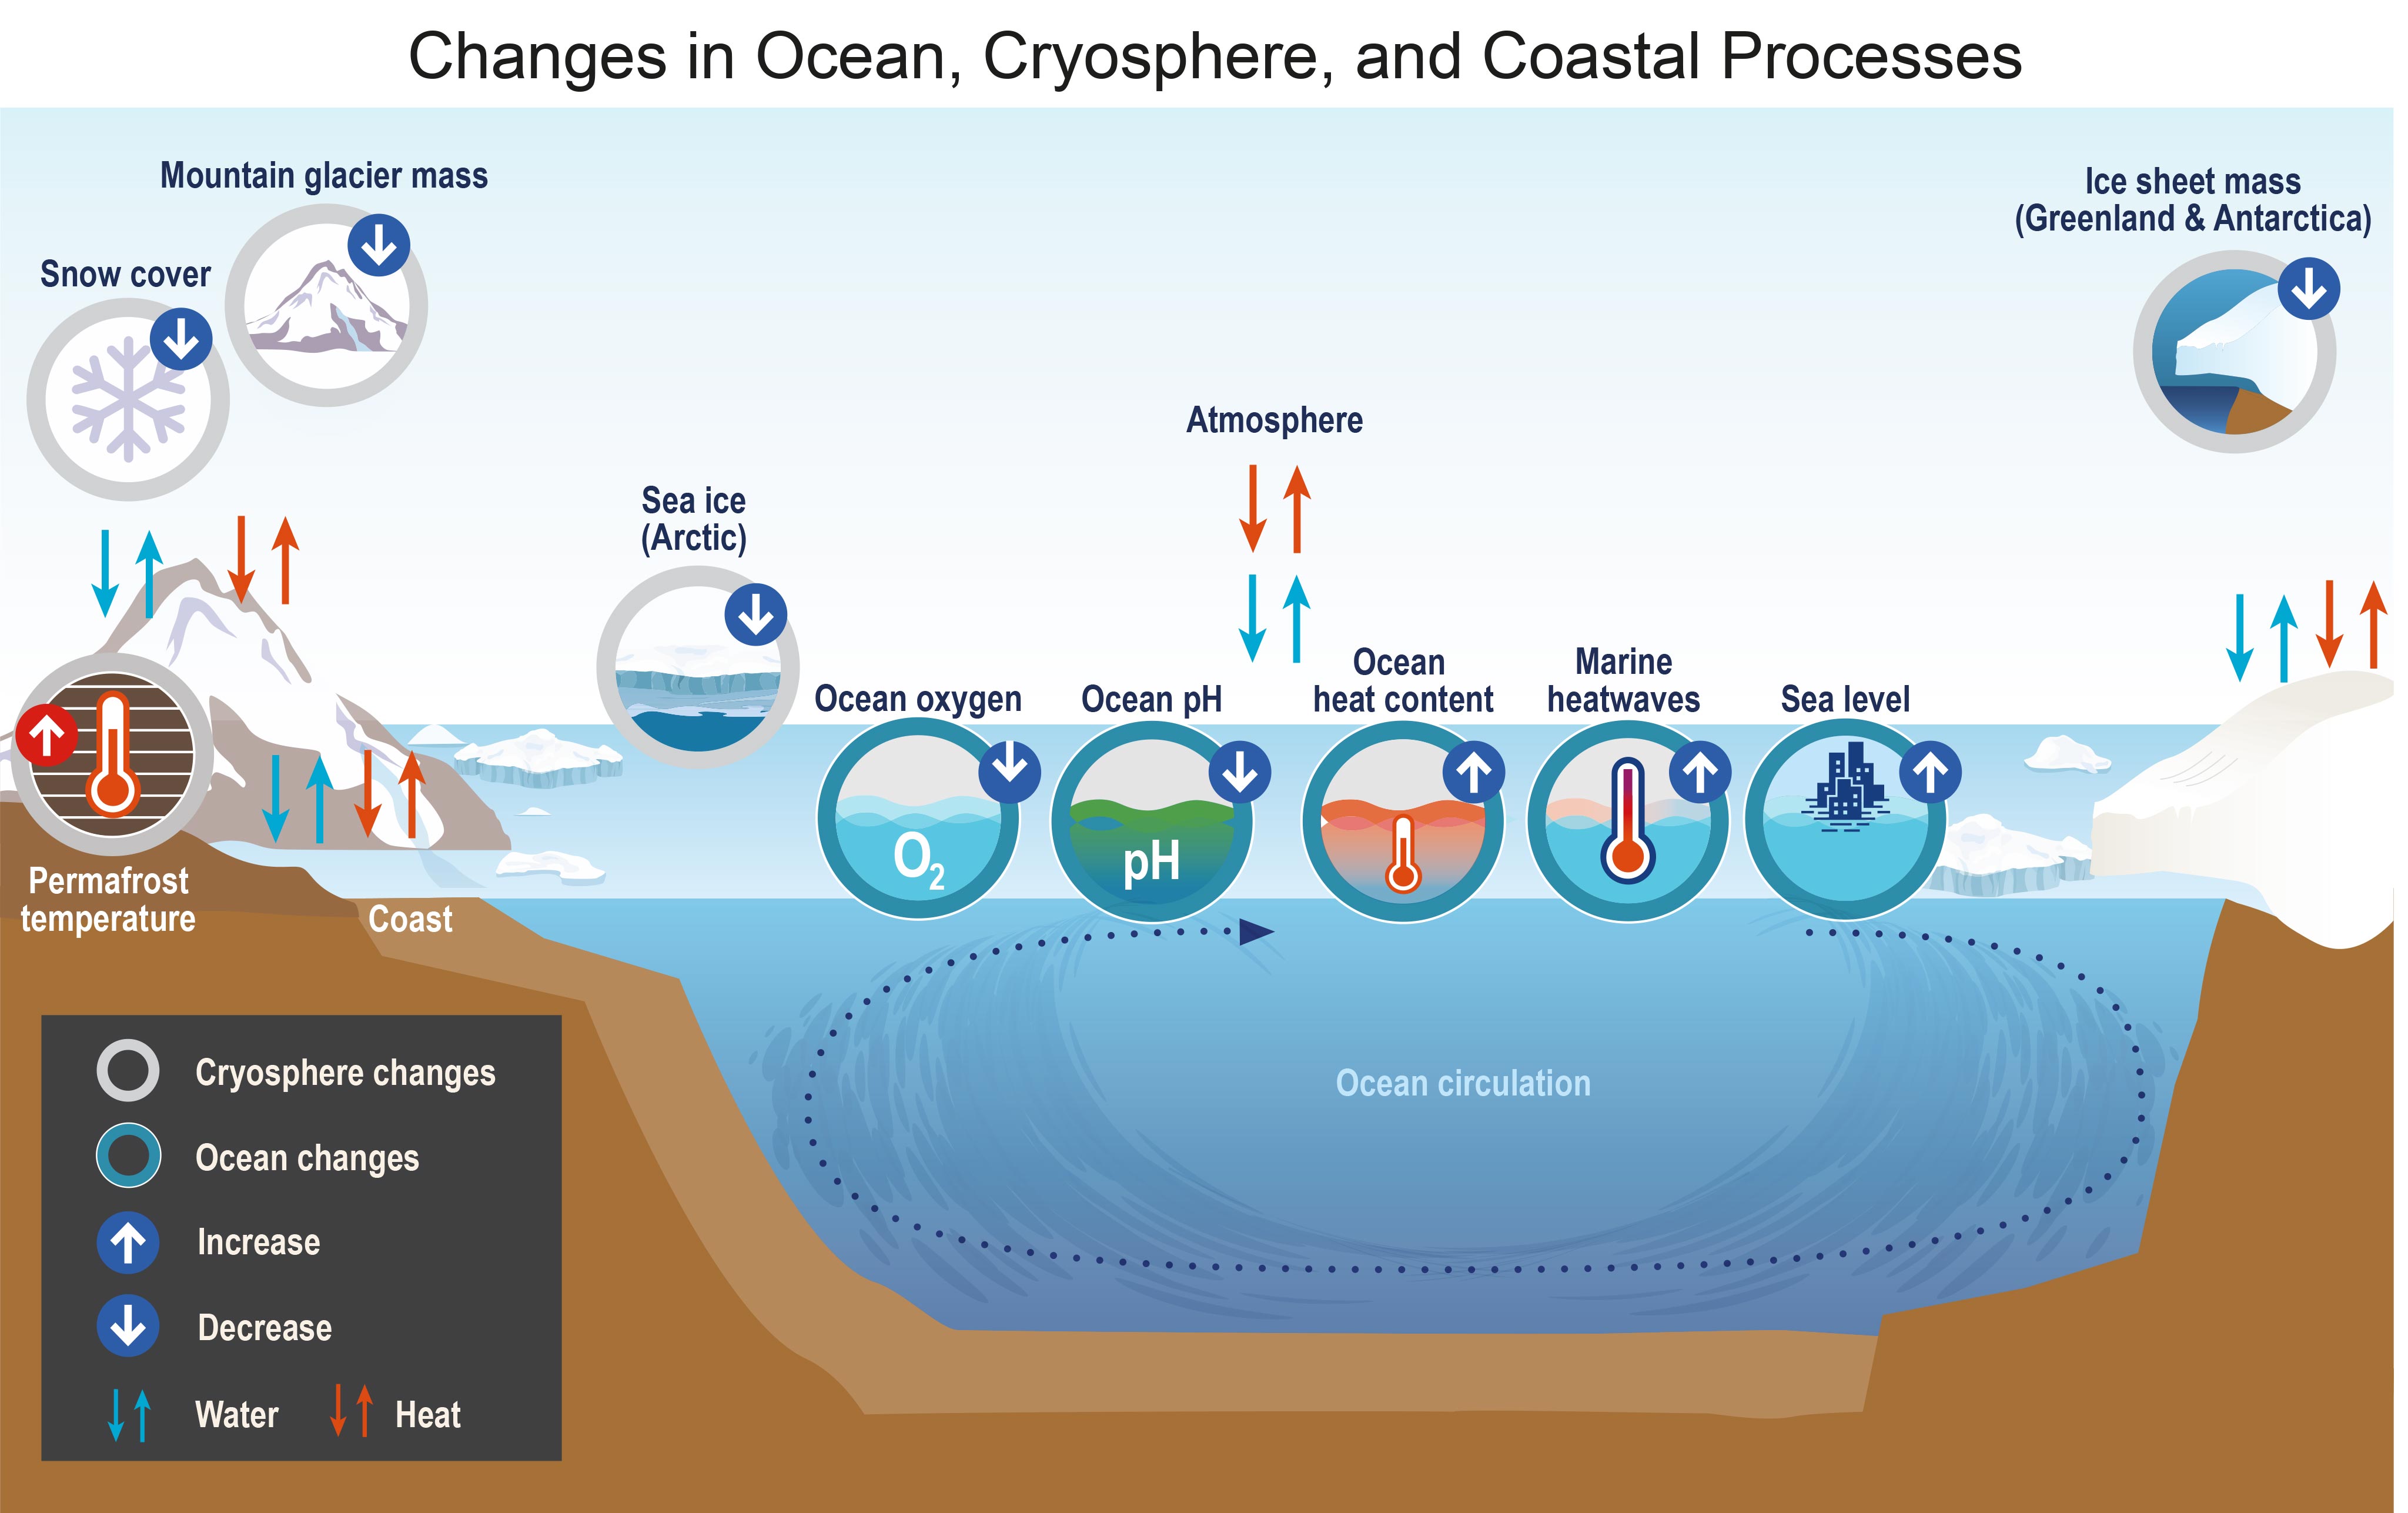 Changes in Ocean, Cryosphere, and Coastal Processes